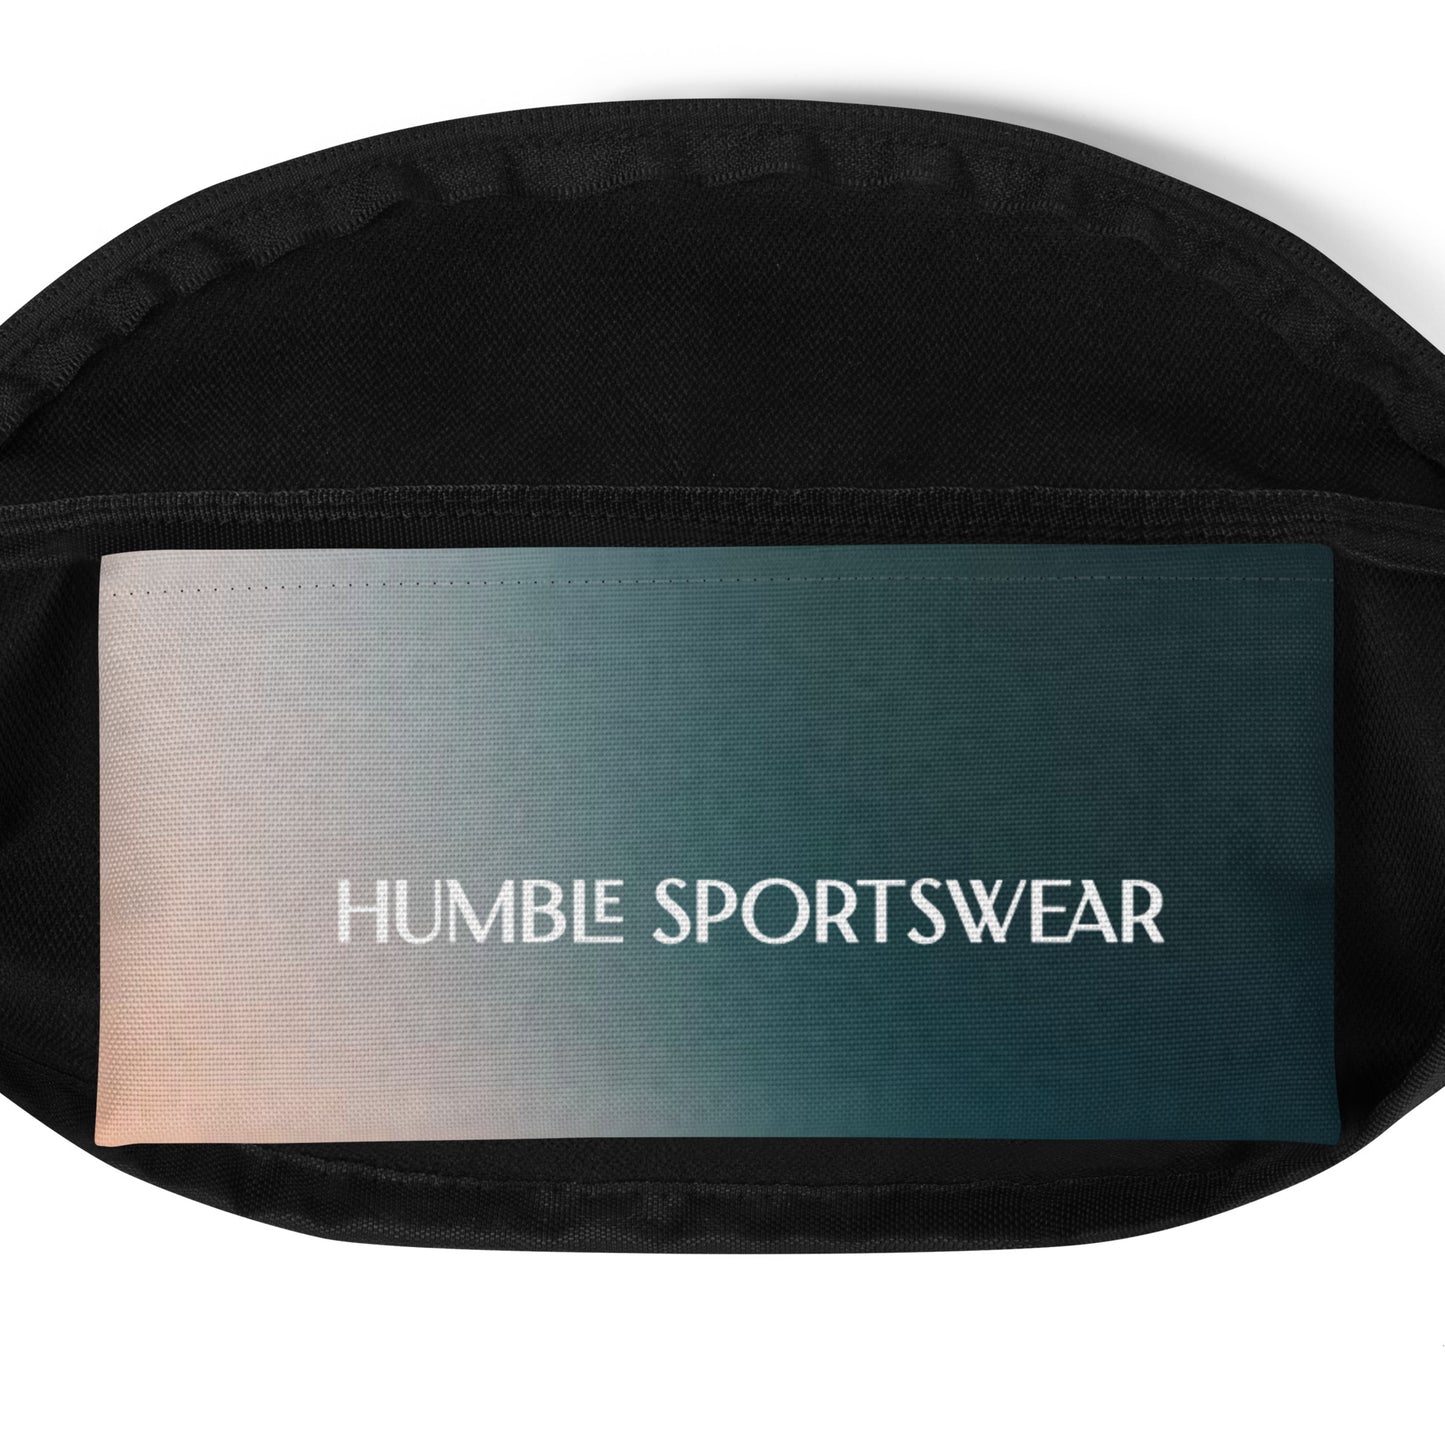 Humble Sportswear, adjustable belt bag in black 